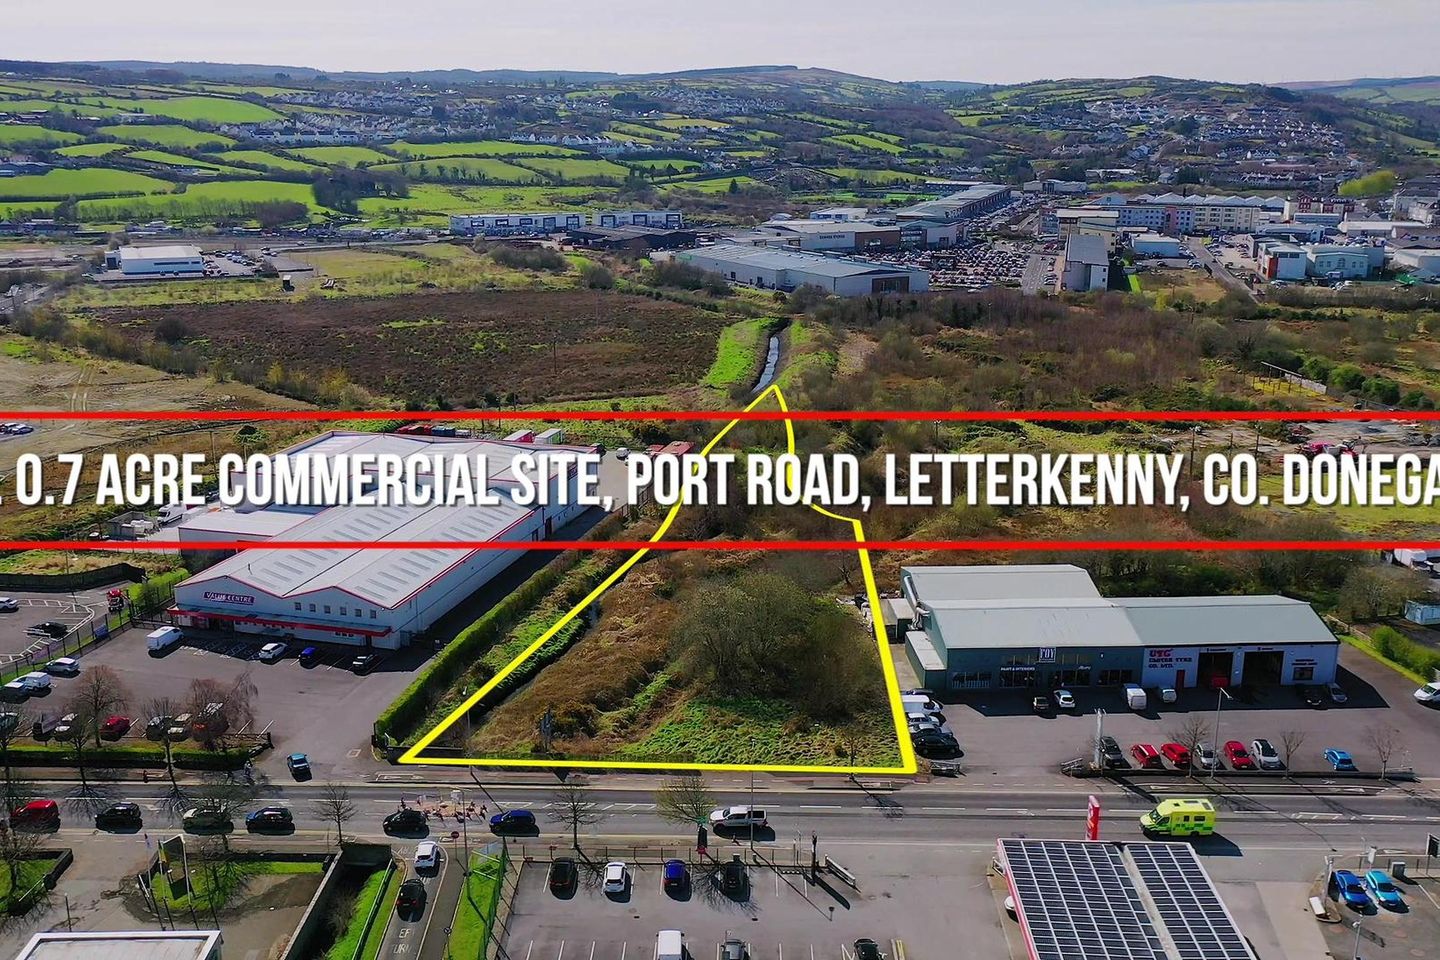 Port Road, Letterkenny, Co. Donegal